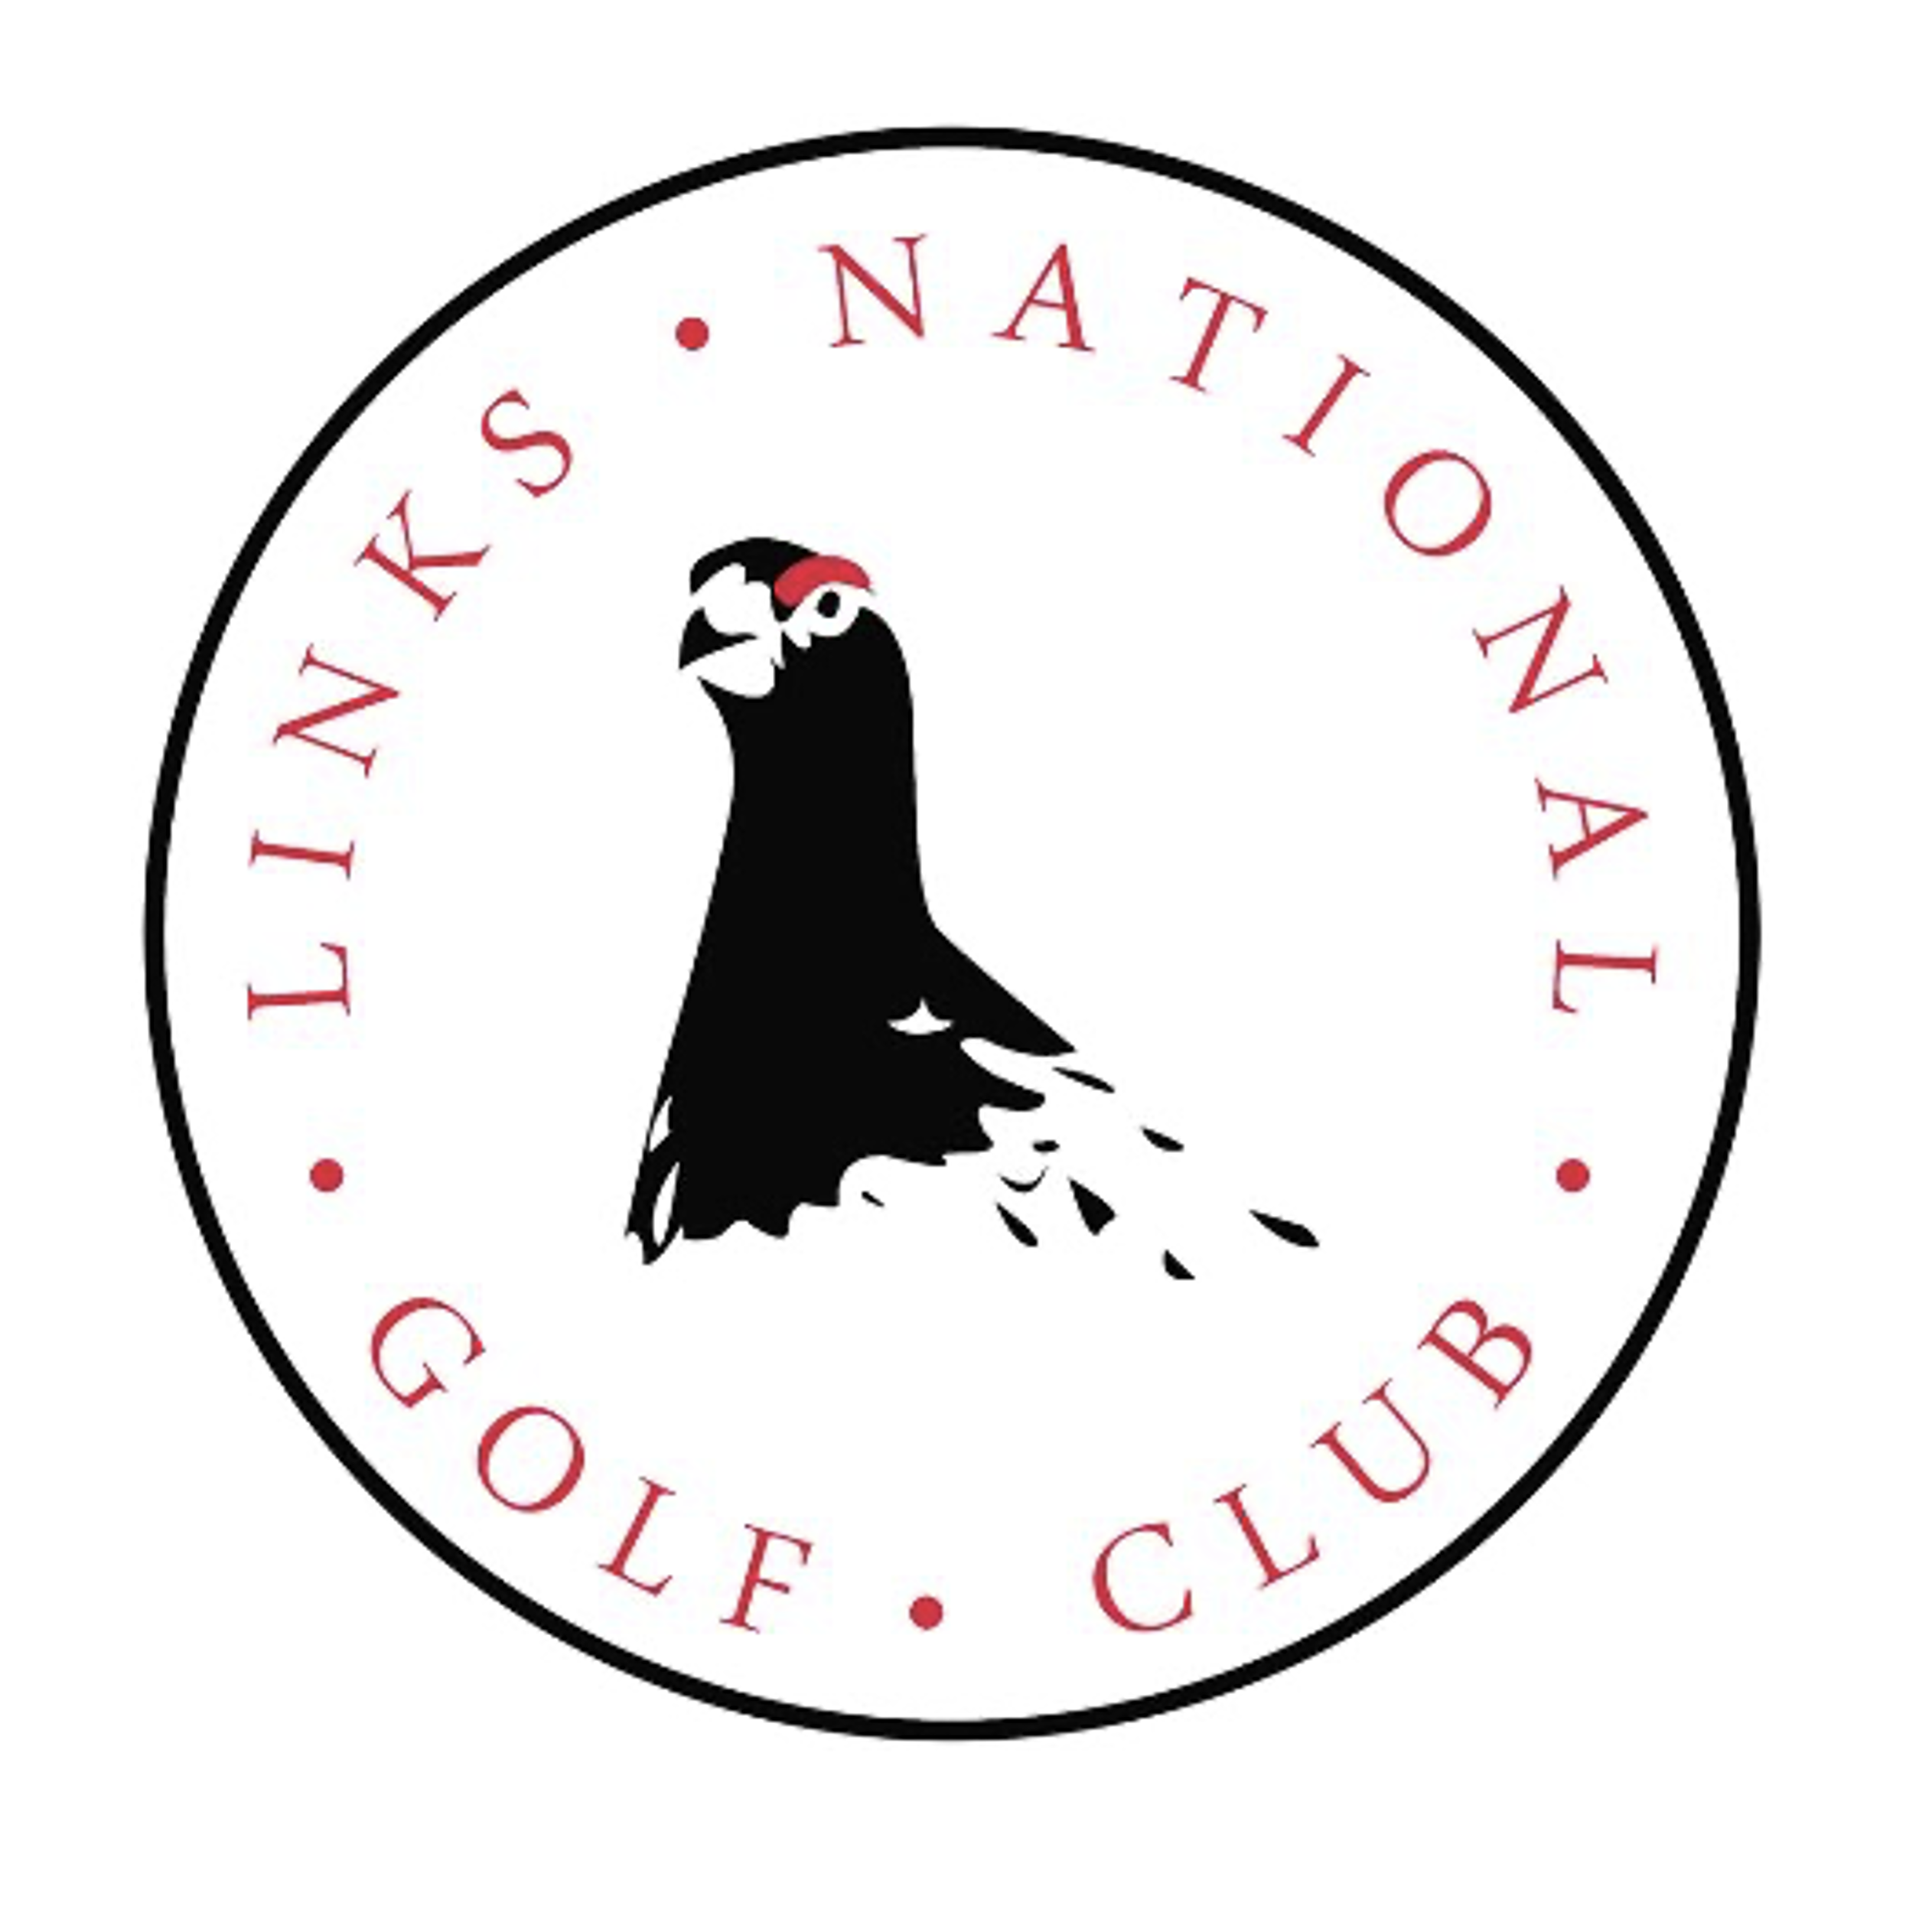 Links National Golf Club